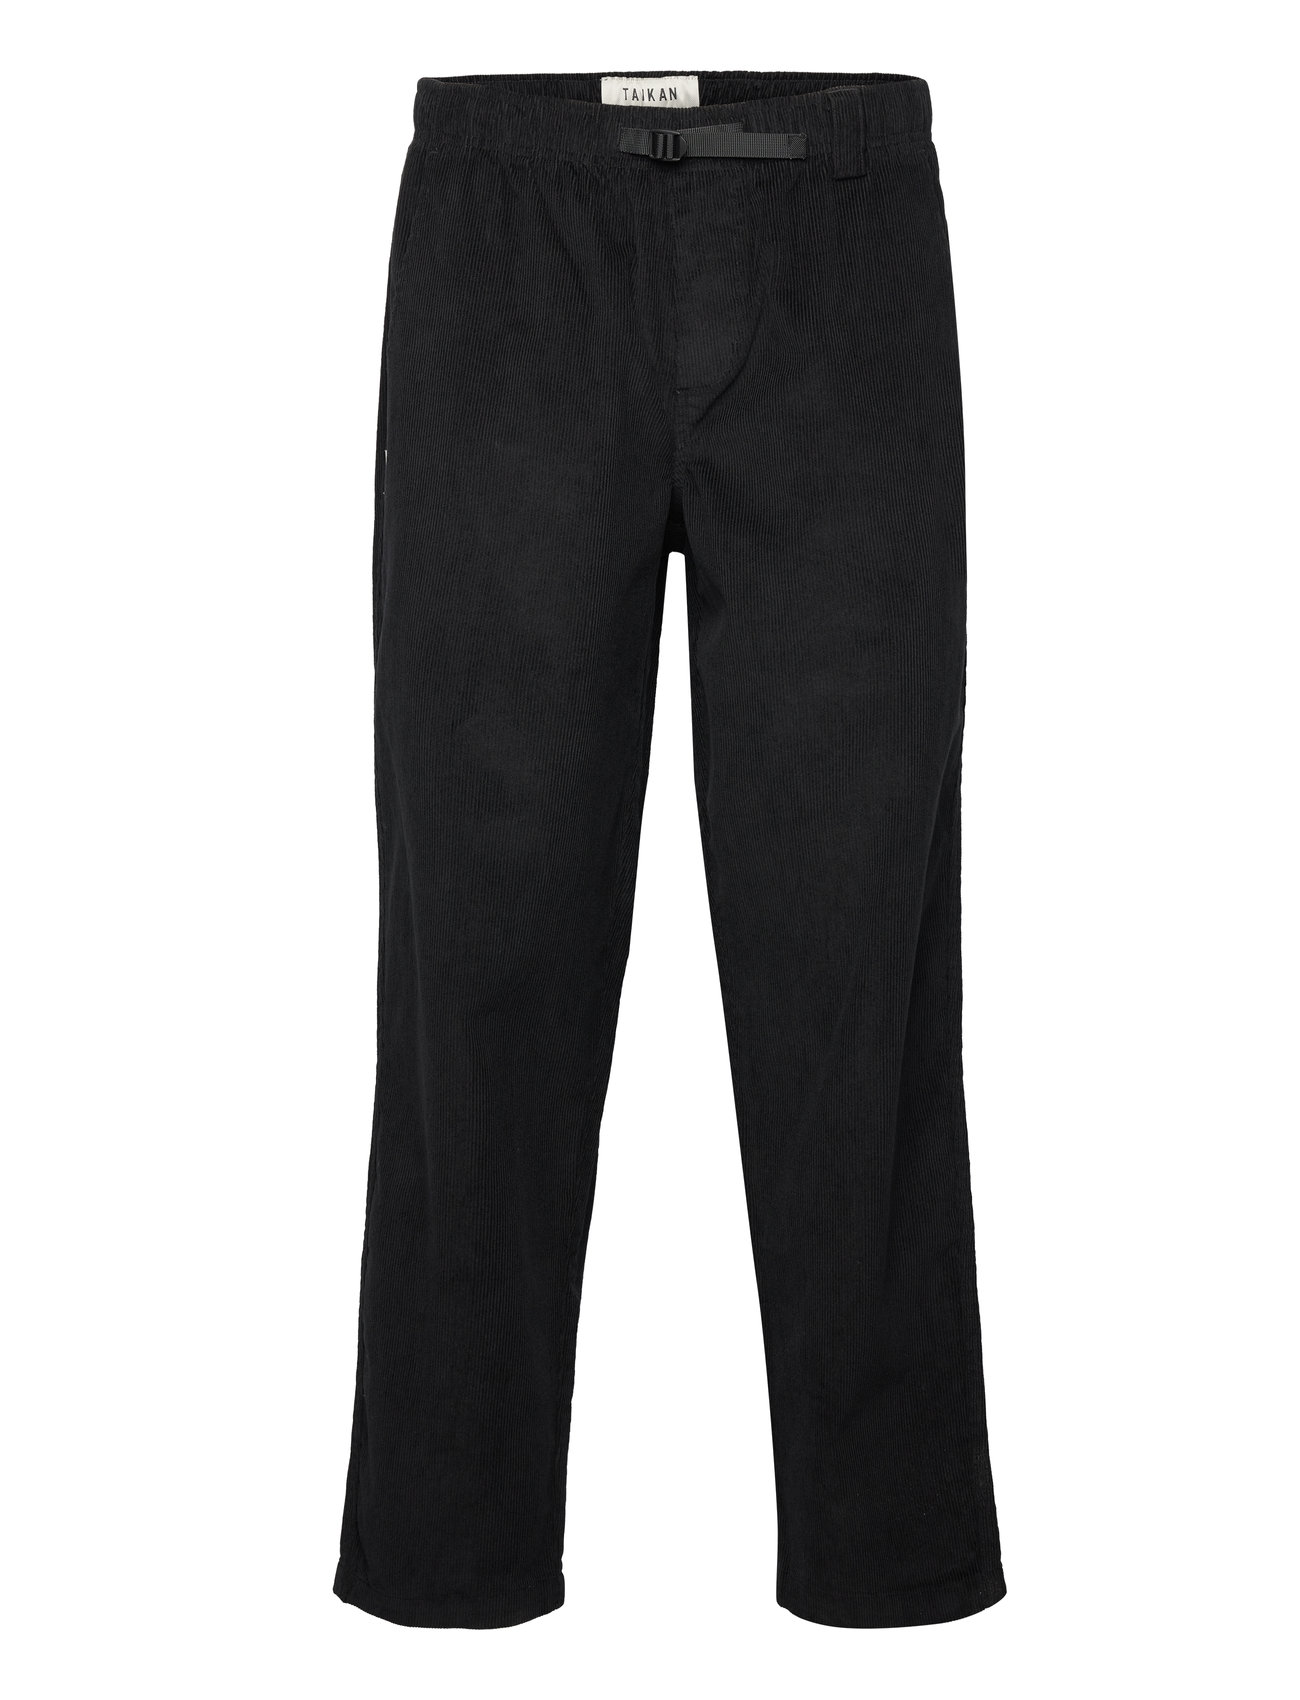 Chiller Pant-Black Corduroy Designers Trousers Casual Black Taikan